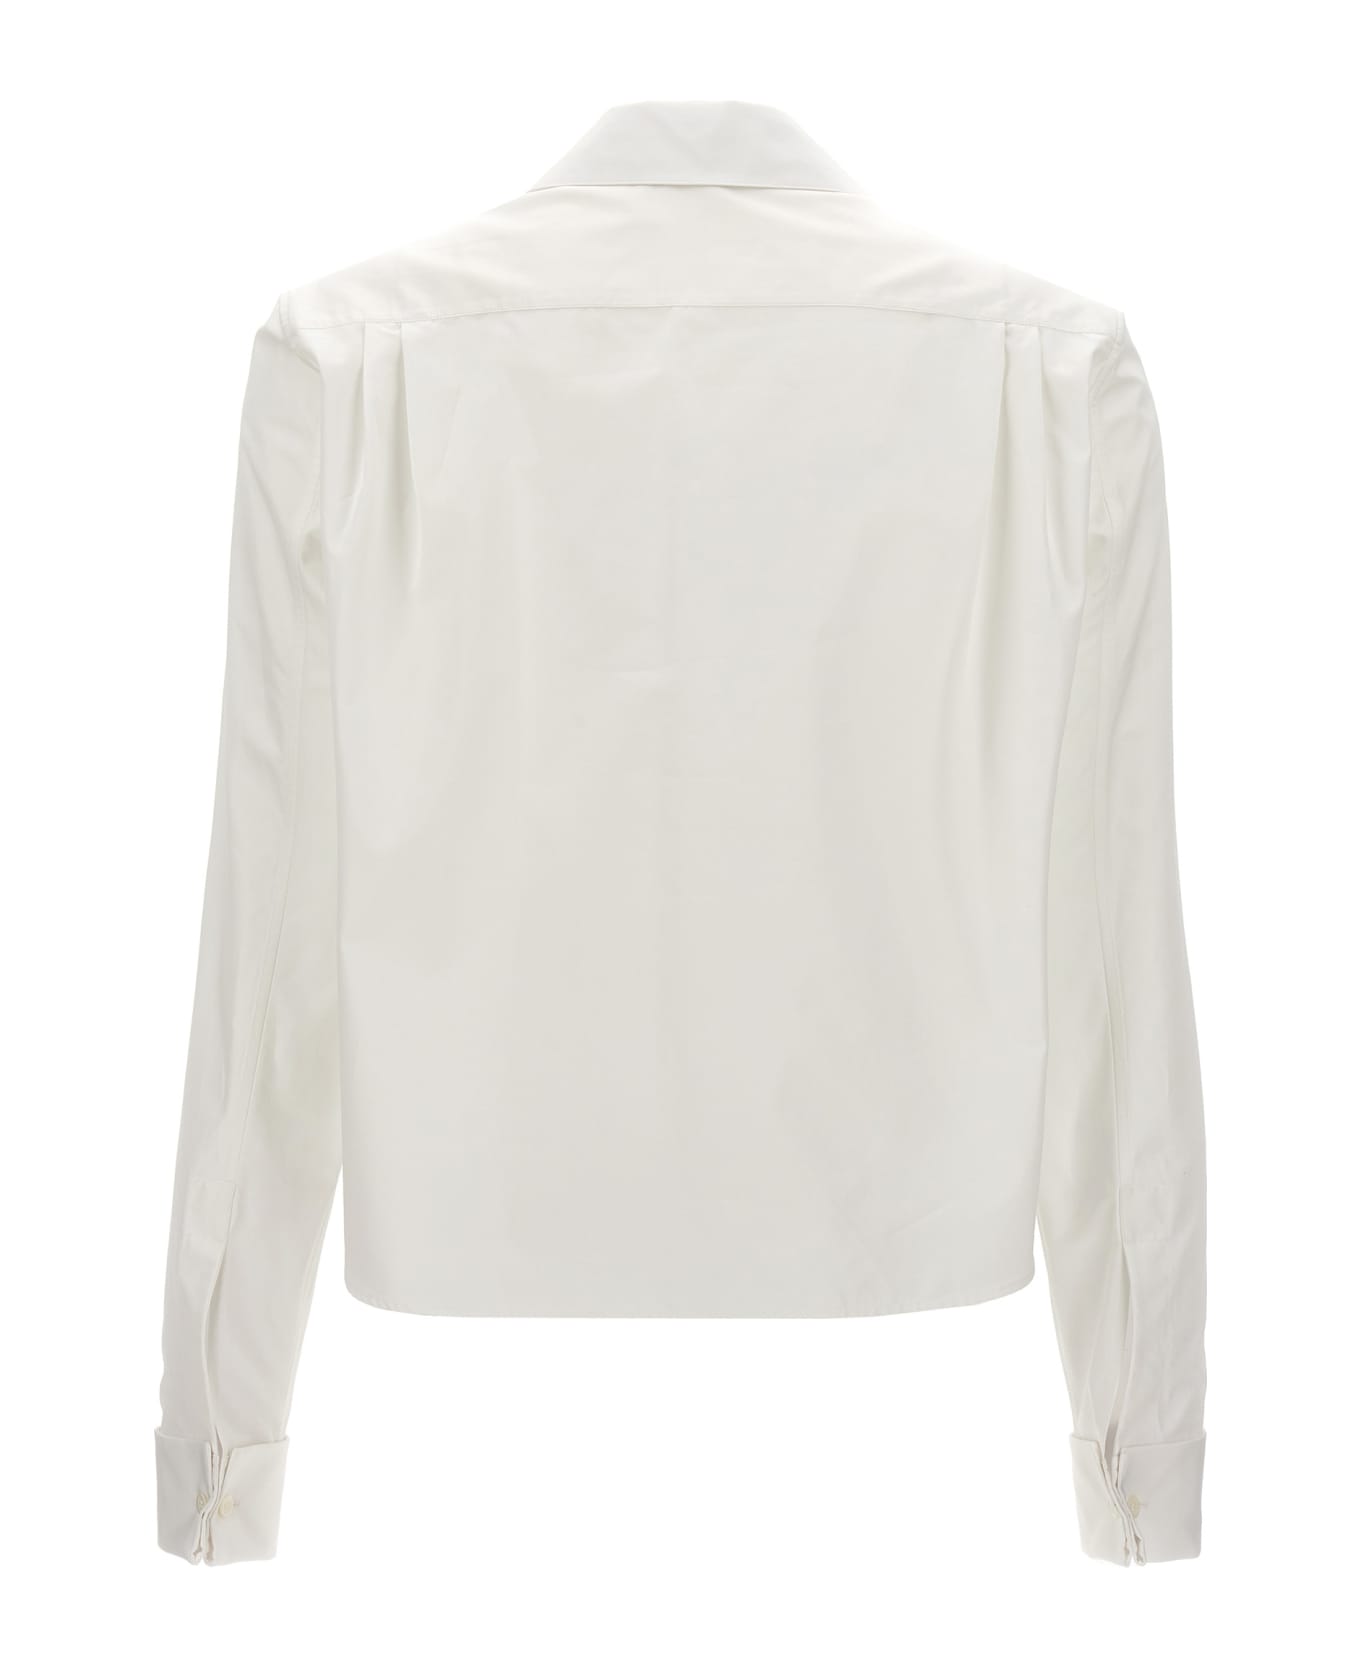 Loewe Pleated Plastron Shirt - White シャツ